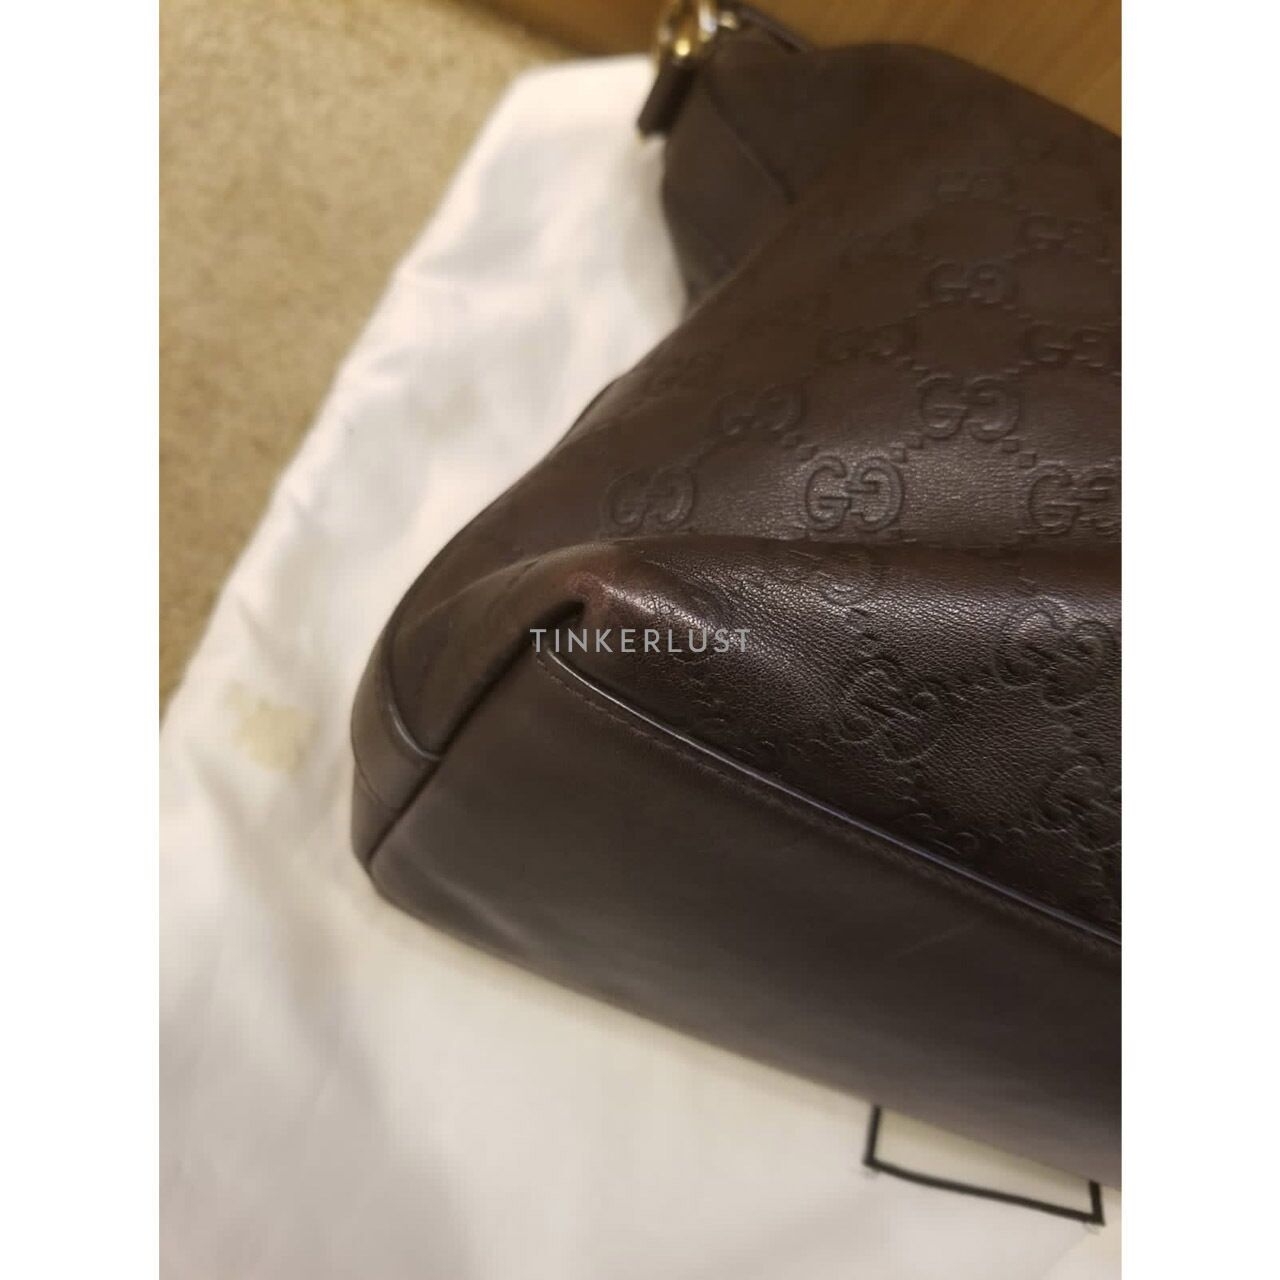 Gucci Guccissima Dark Brown Leather Shoulder Bag